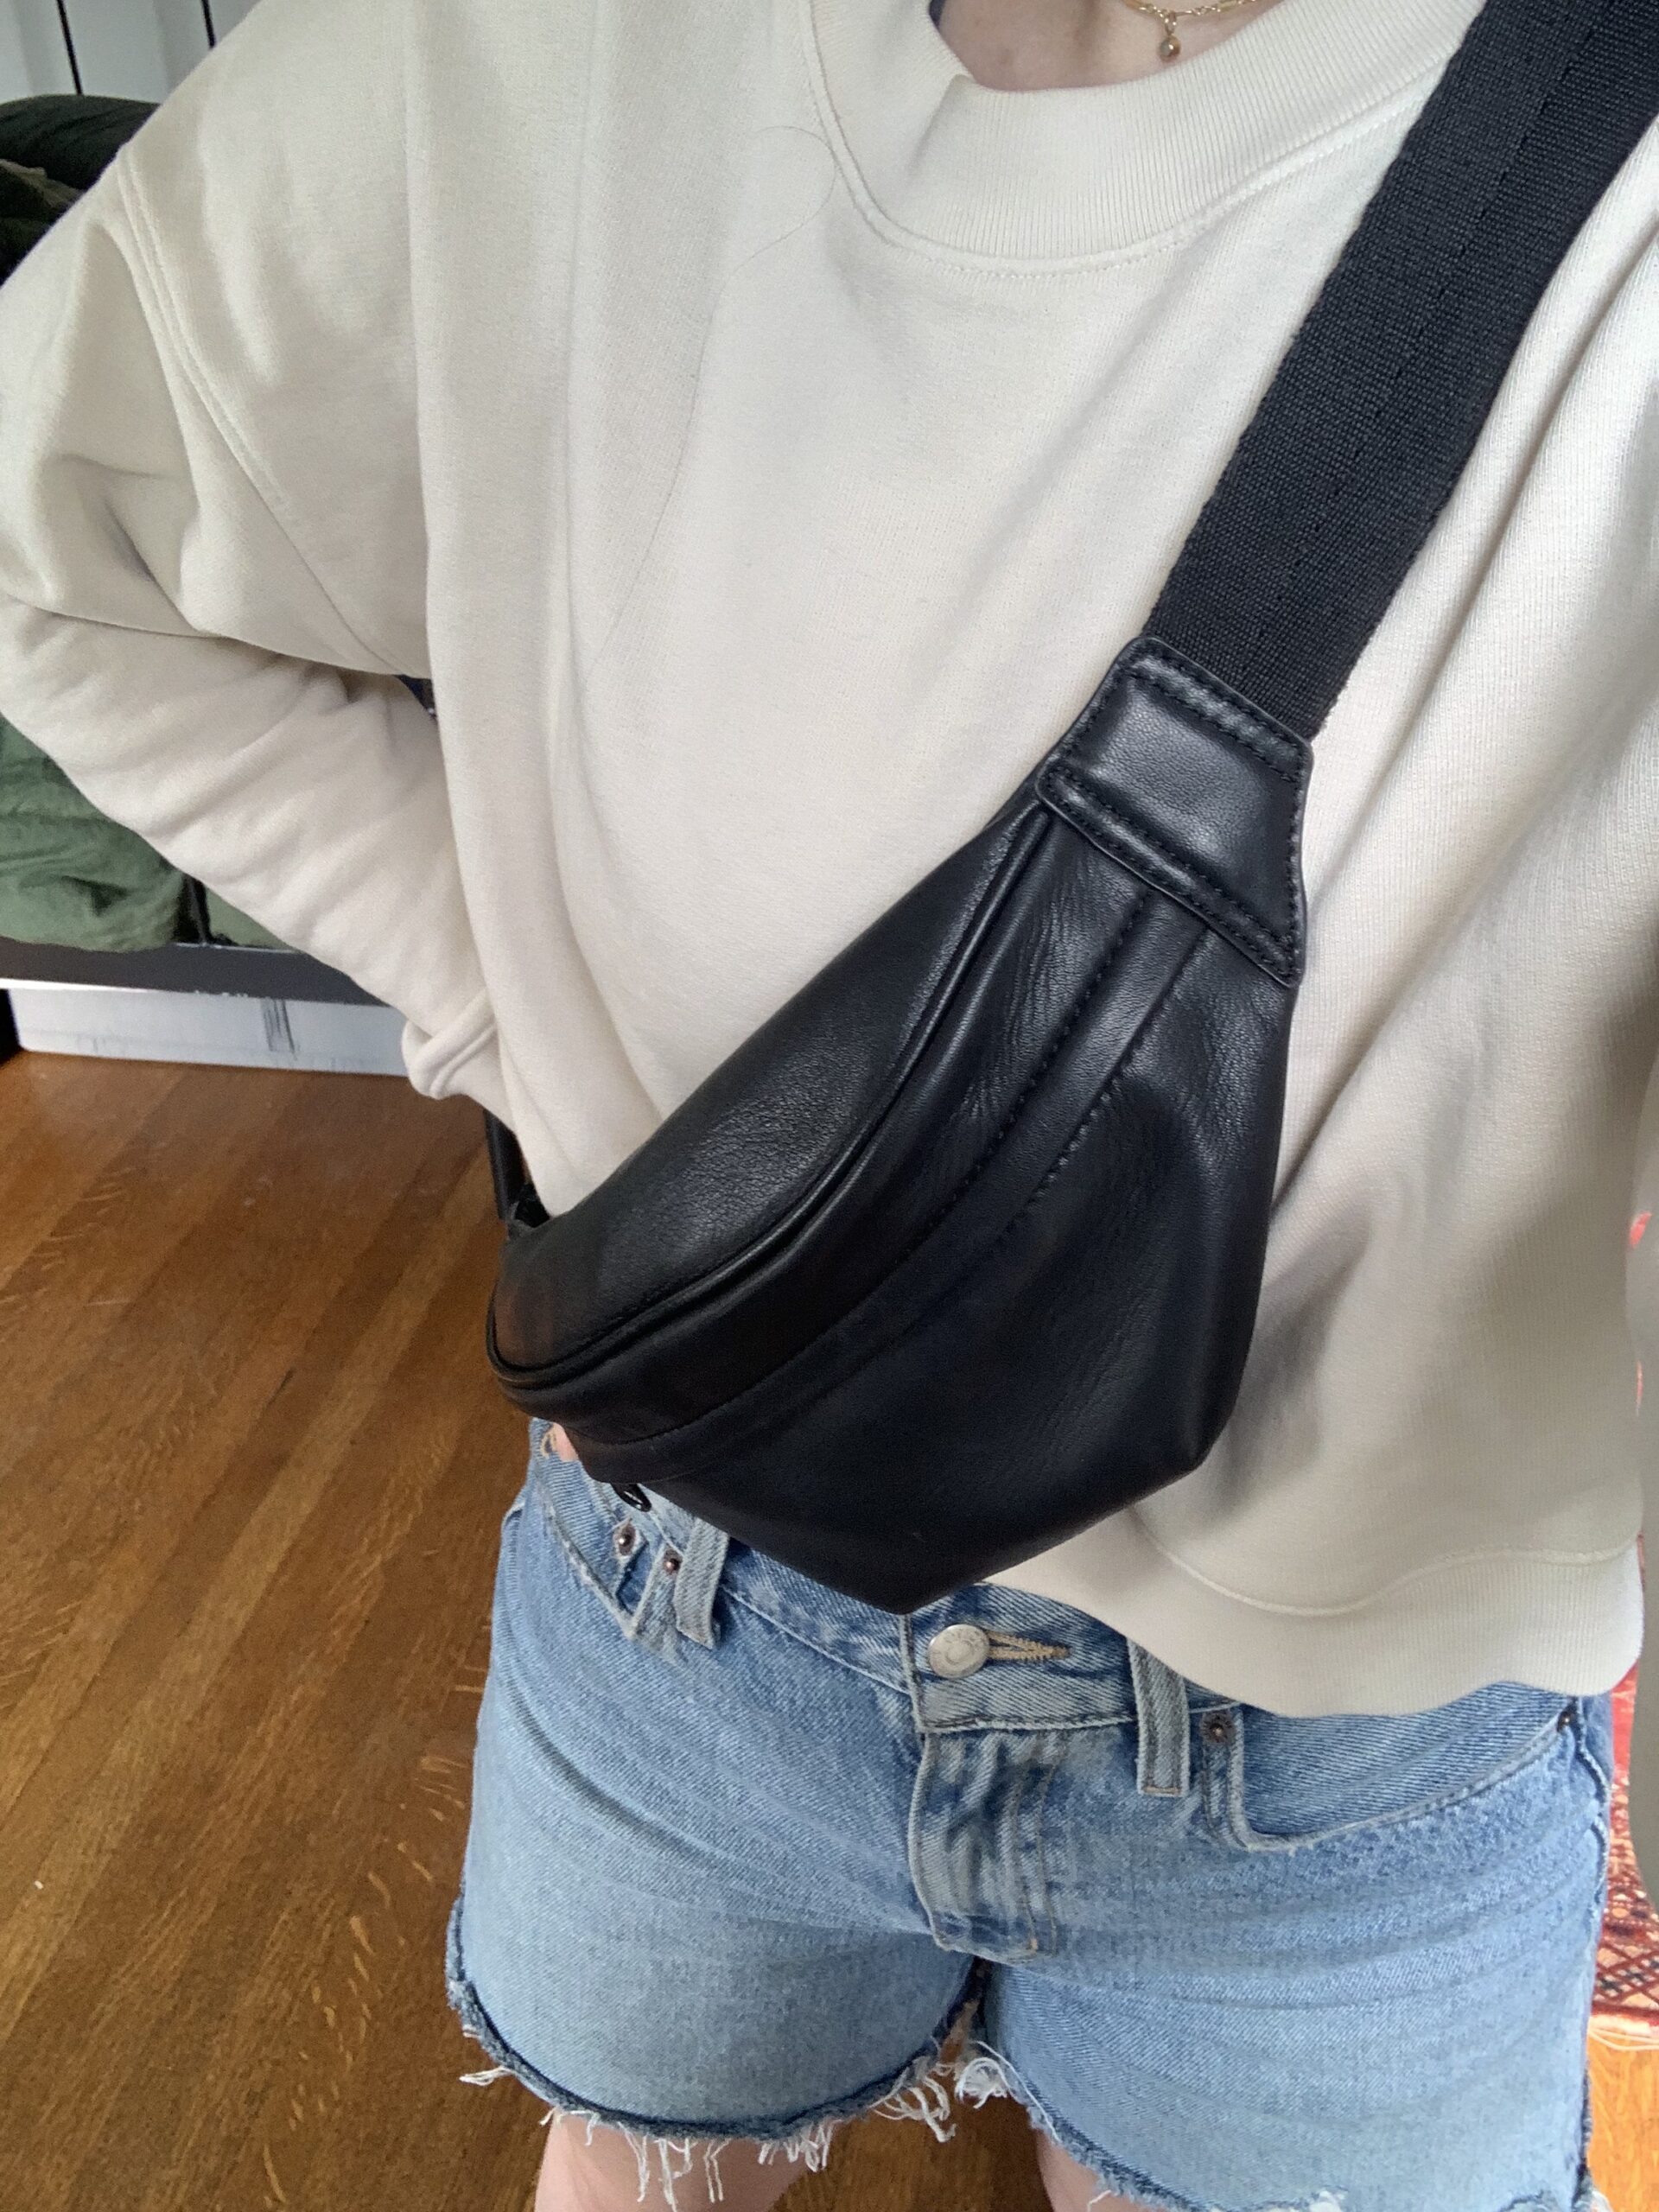 20 Best Fanny Packs For Men: Belt Bags for Everyday Carry 2023